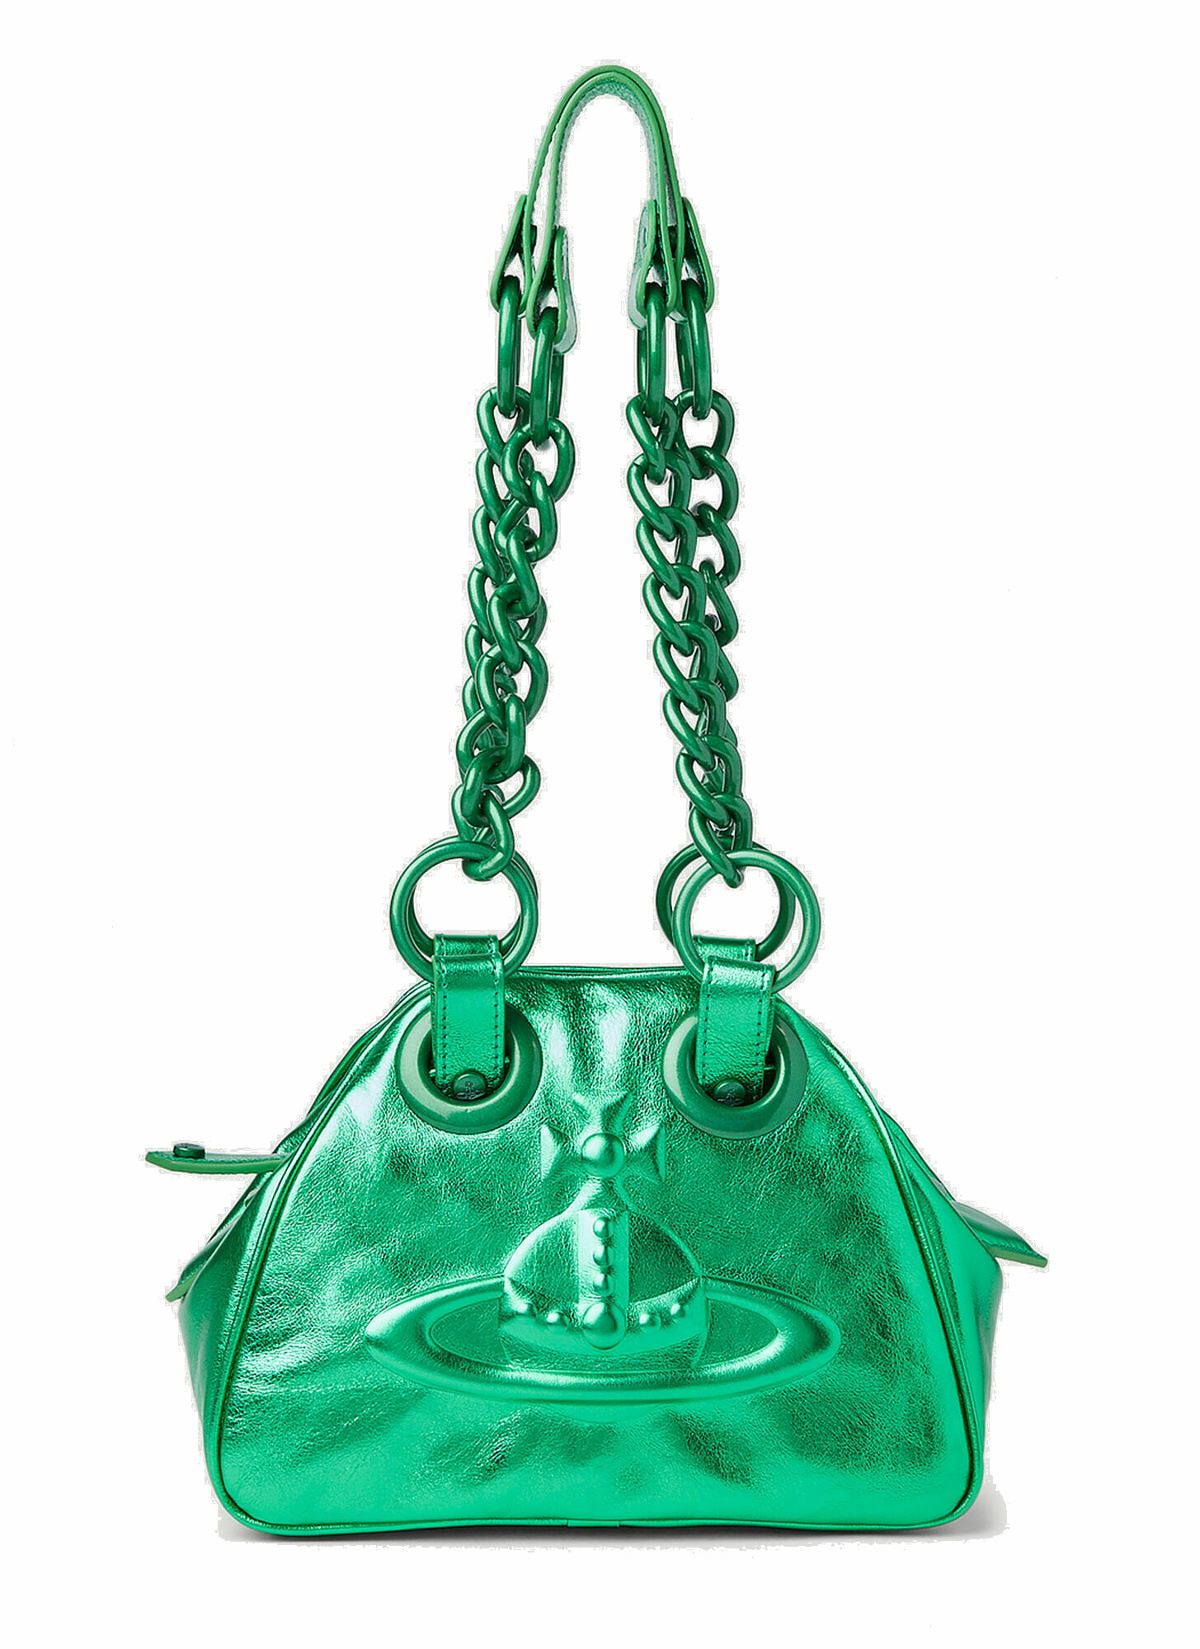 Vivienne Westwood - Archive Orb Chain Shoulder Bag in Green 